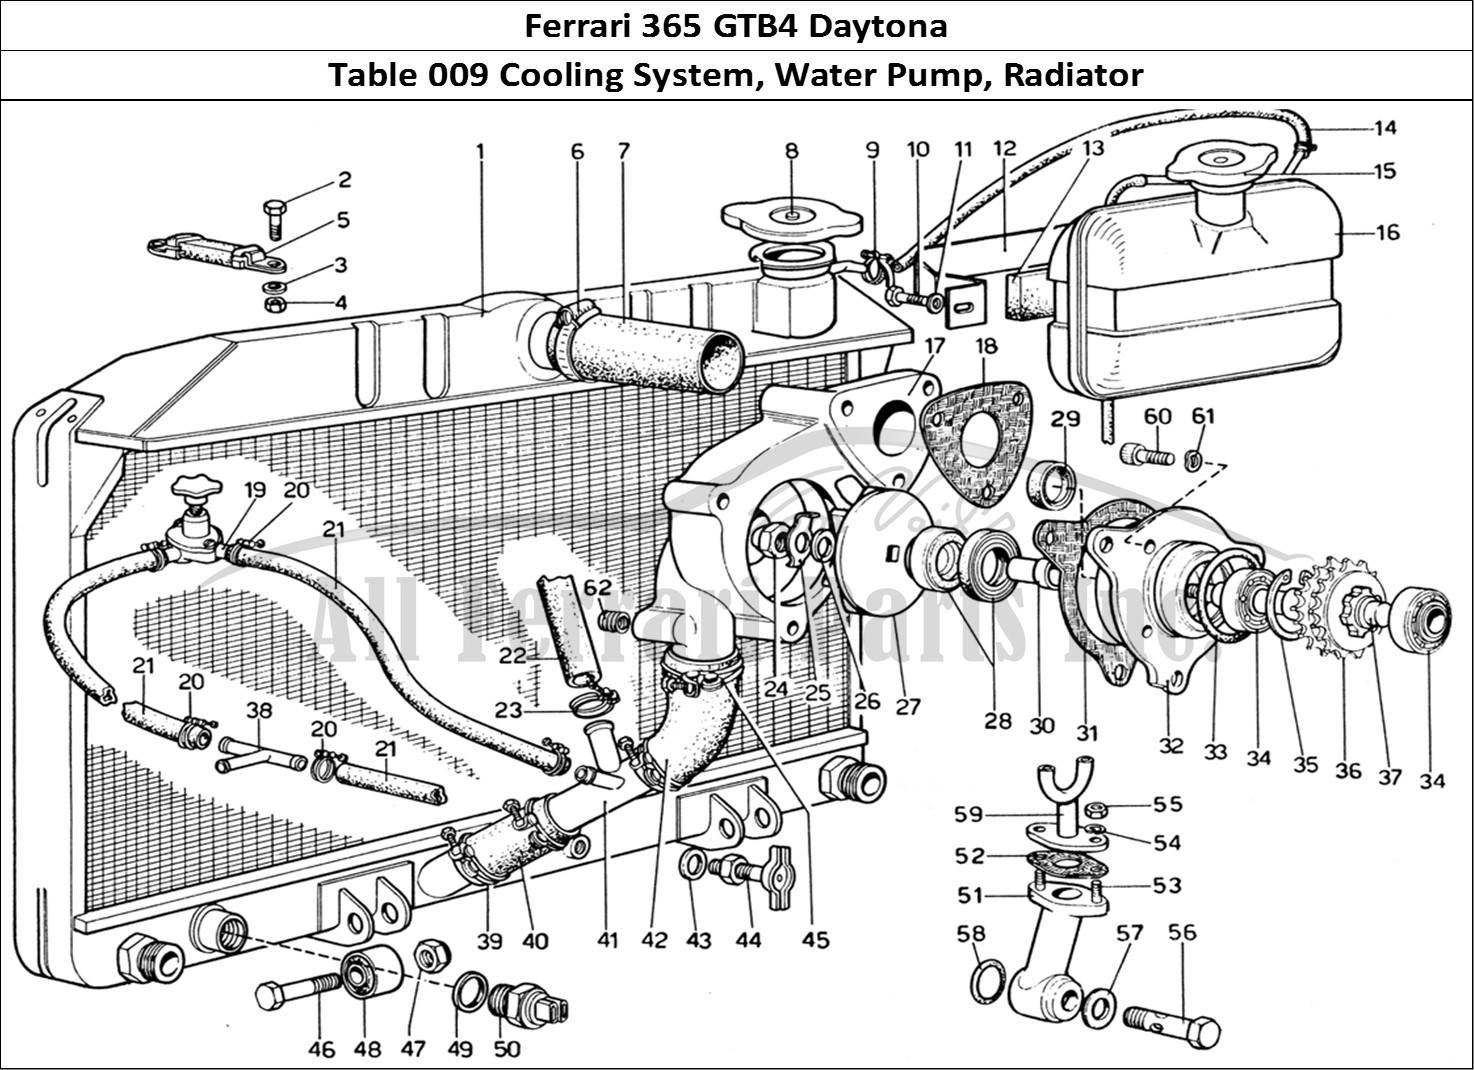 Ferrari Parts Ferrari 365 GTB4 Daytona (1969) Page 009 Cooling System - Water Pu